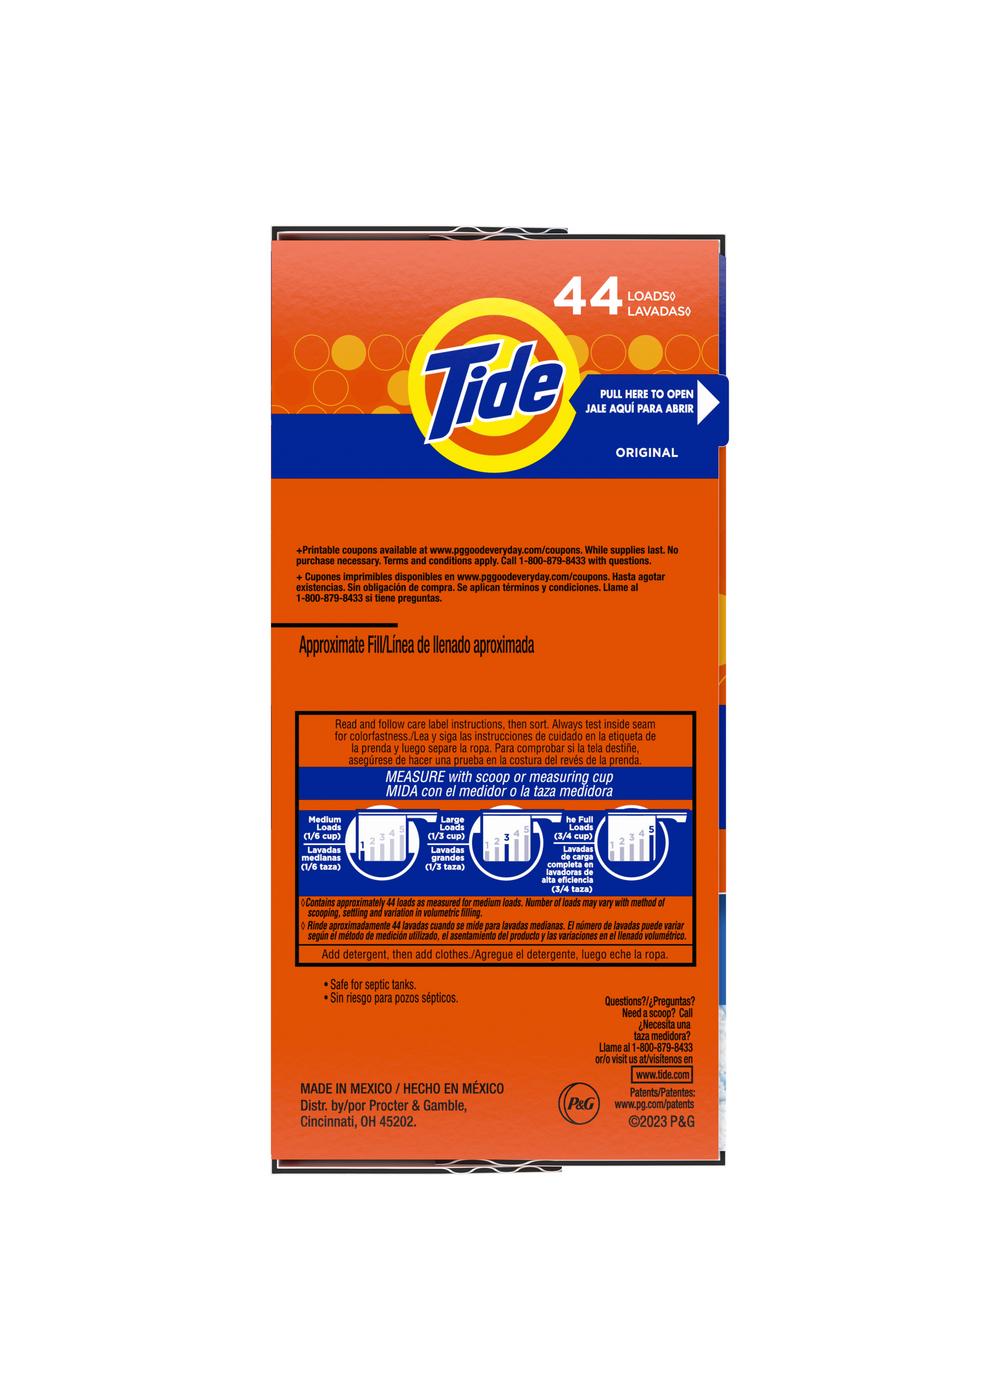 Tide HE Turbo Powder Laundry Detergent, 44 Loads - Original; image 7 of 8